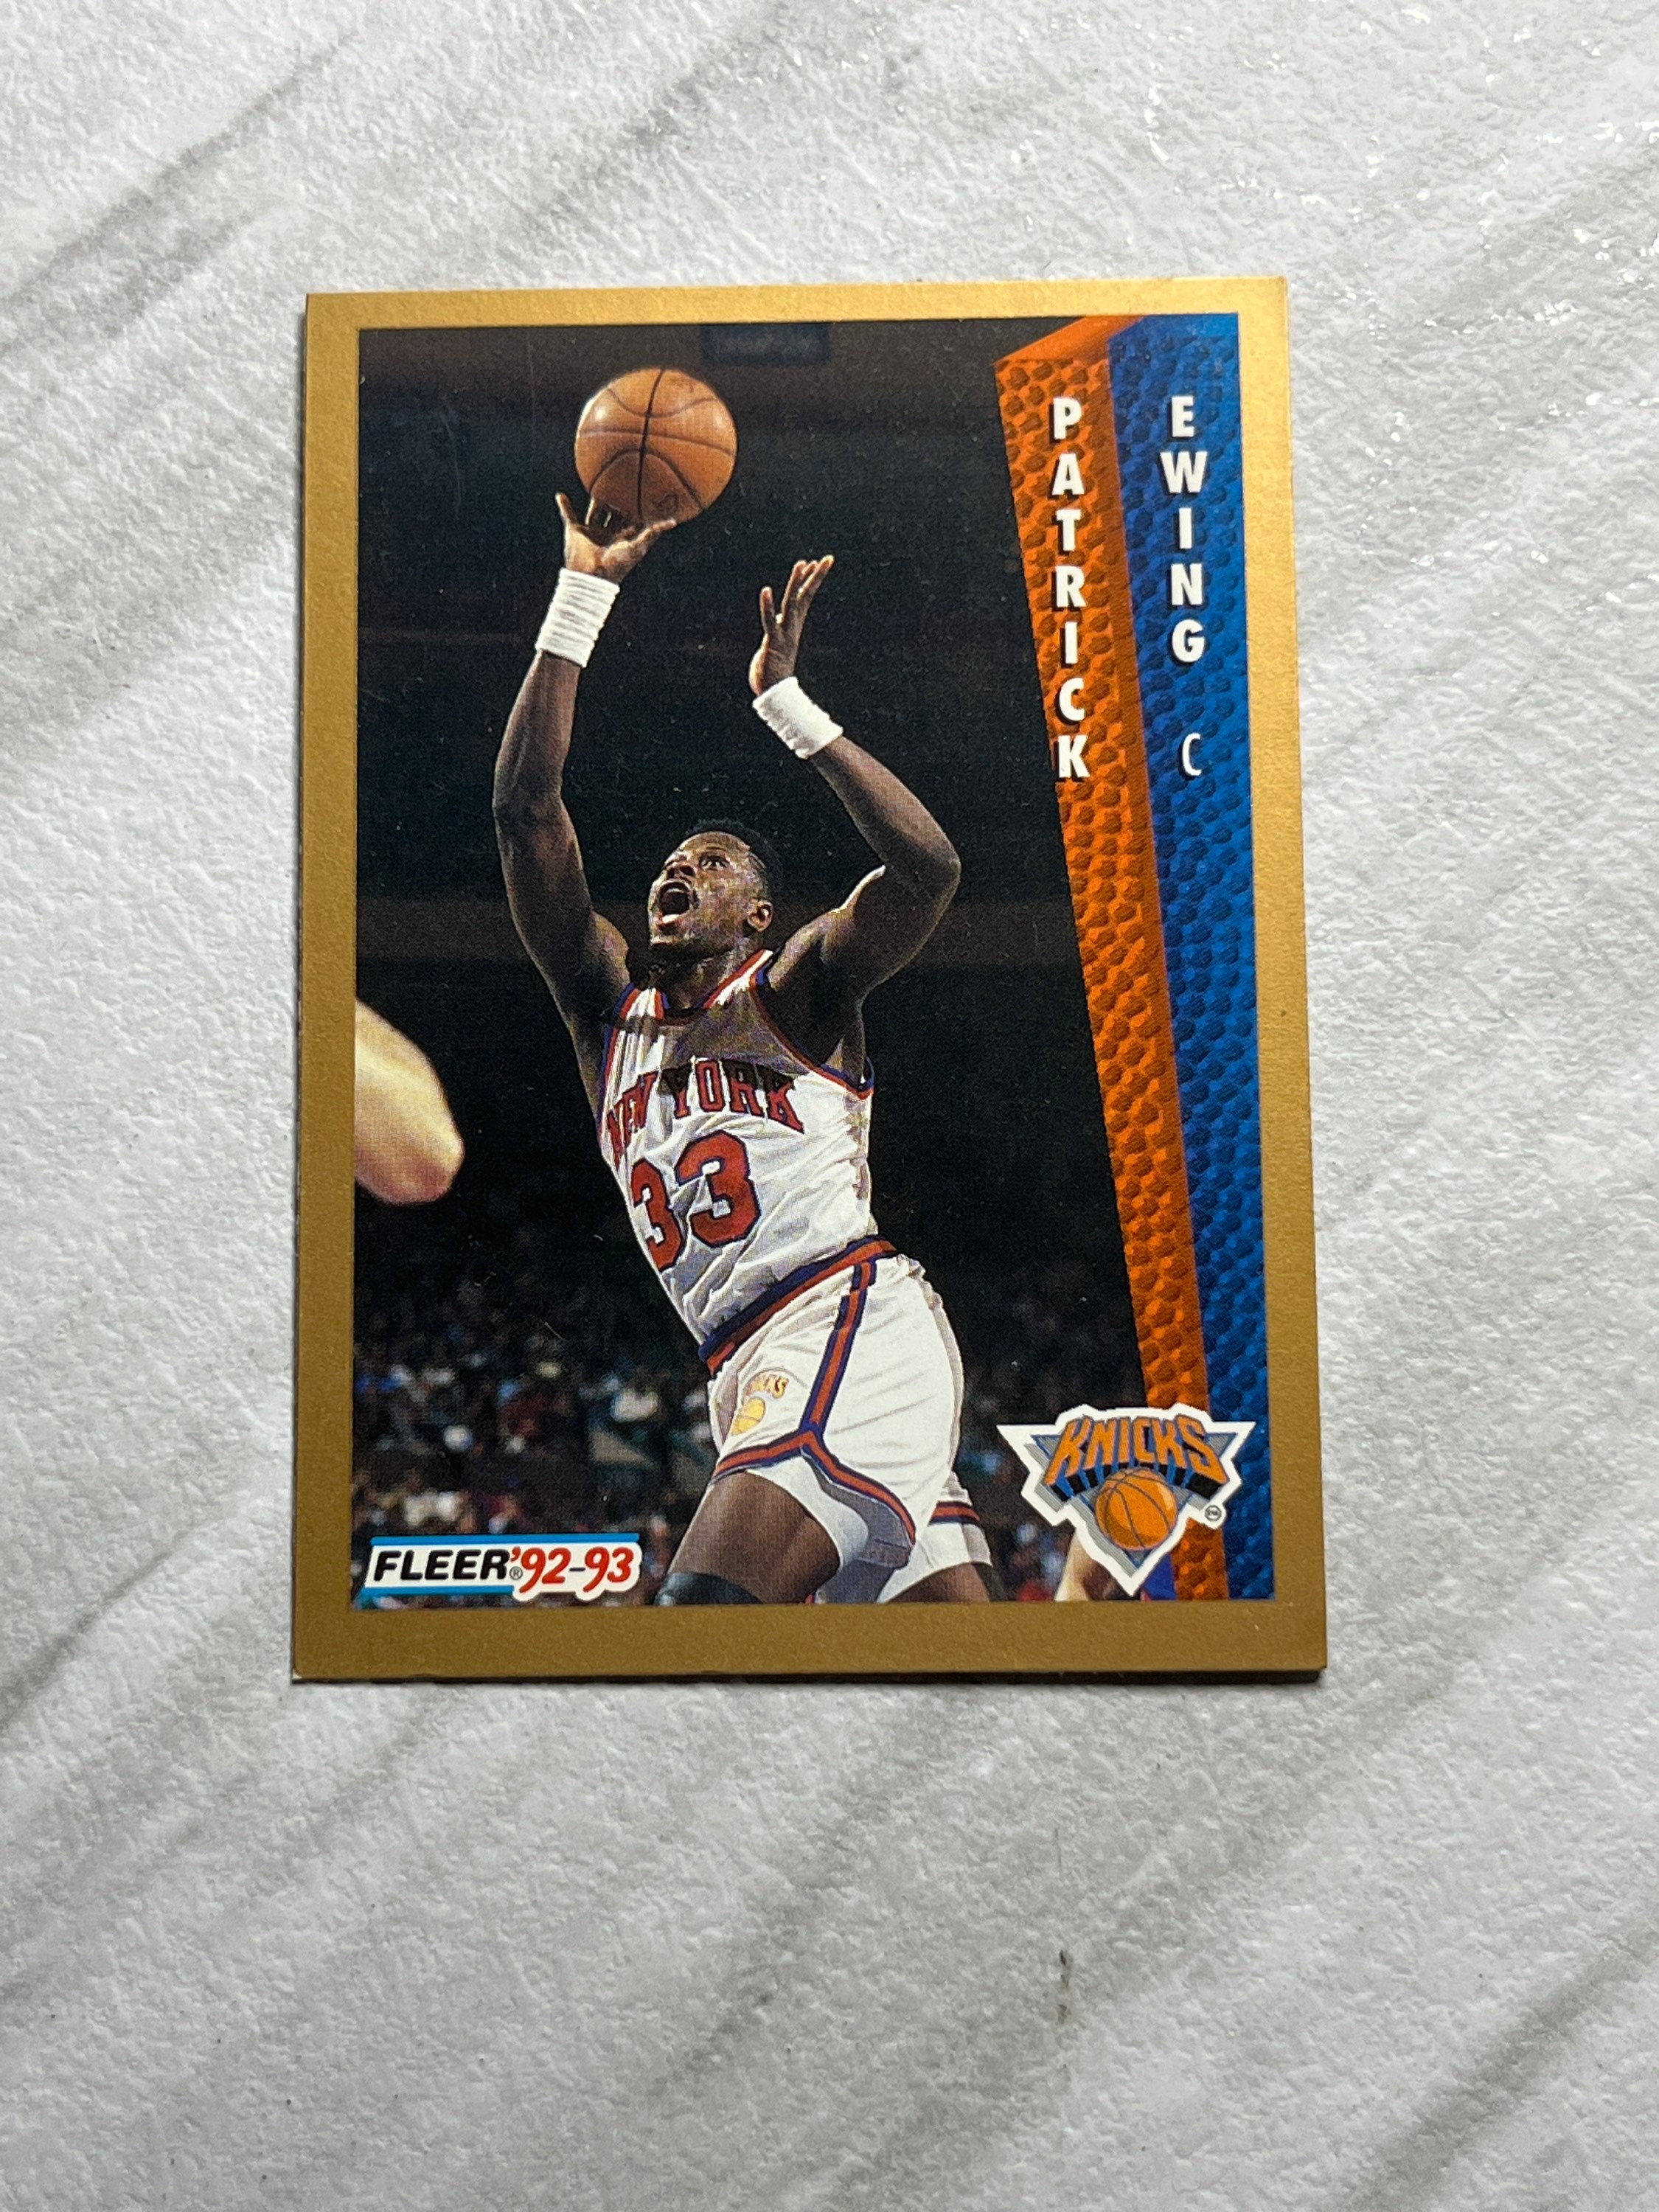  1989-90 Hoops New York Knicks Team Set with 2 Patrick